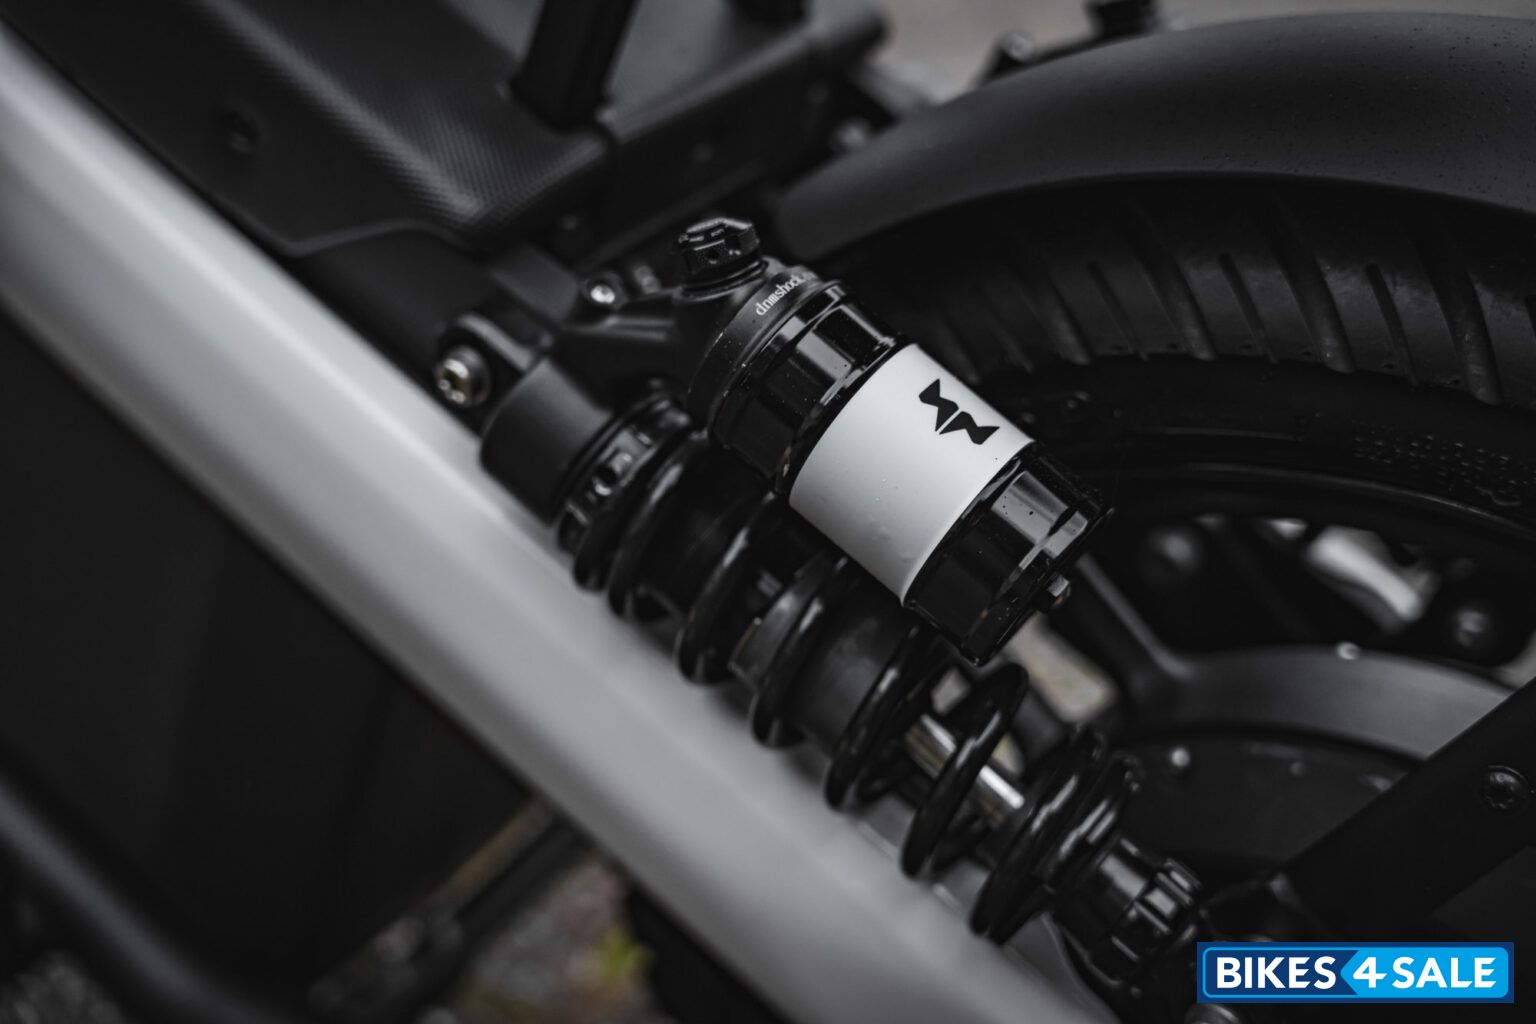 Brekr B7000 - Advanced suspension system with gas shocks